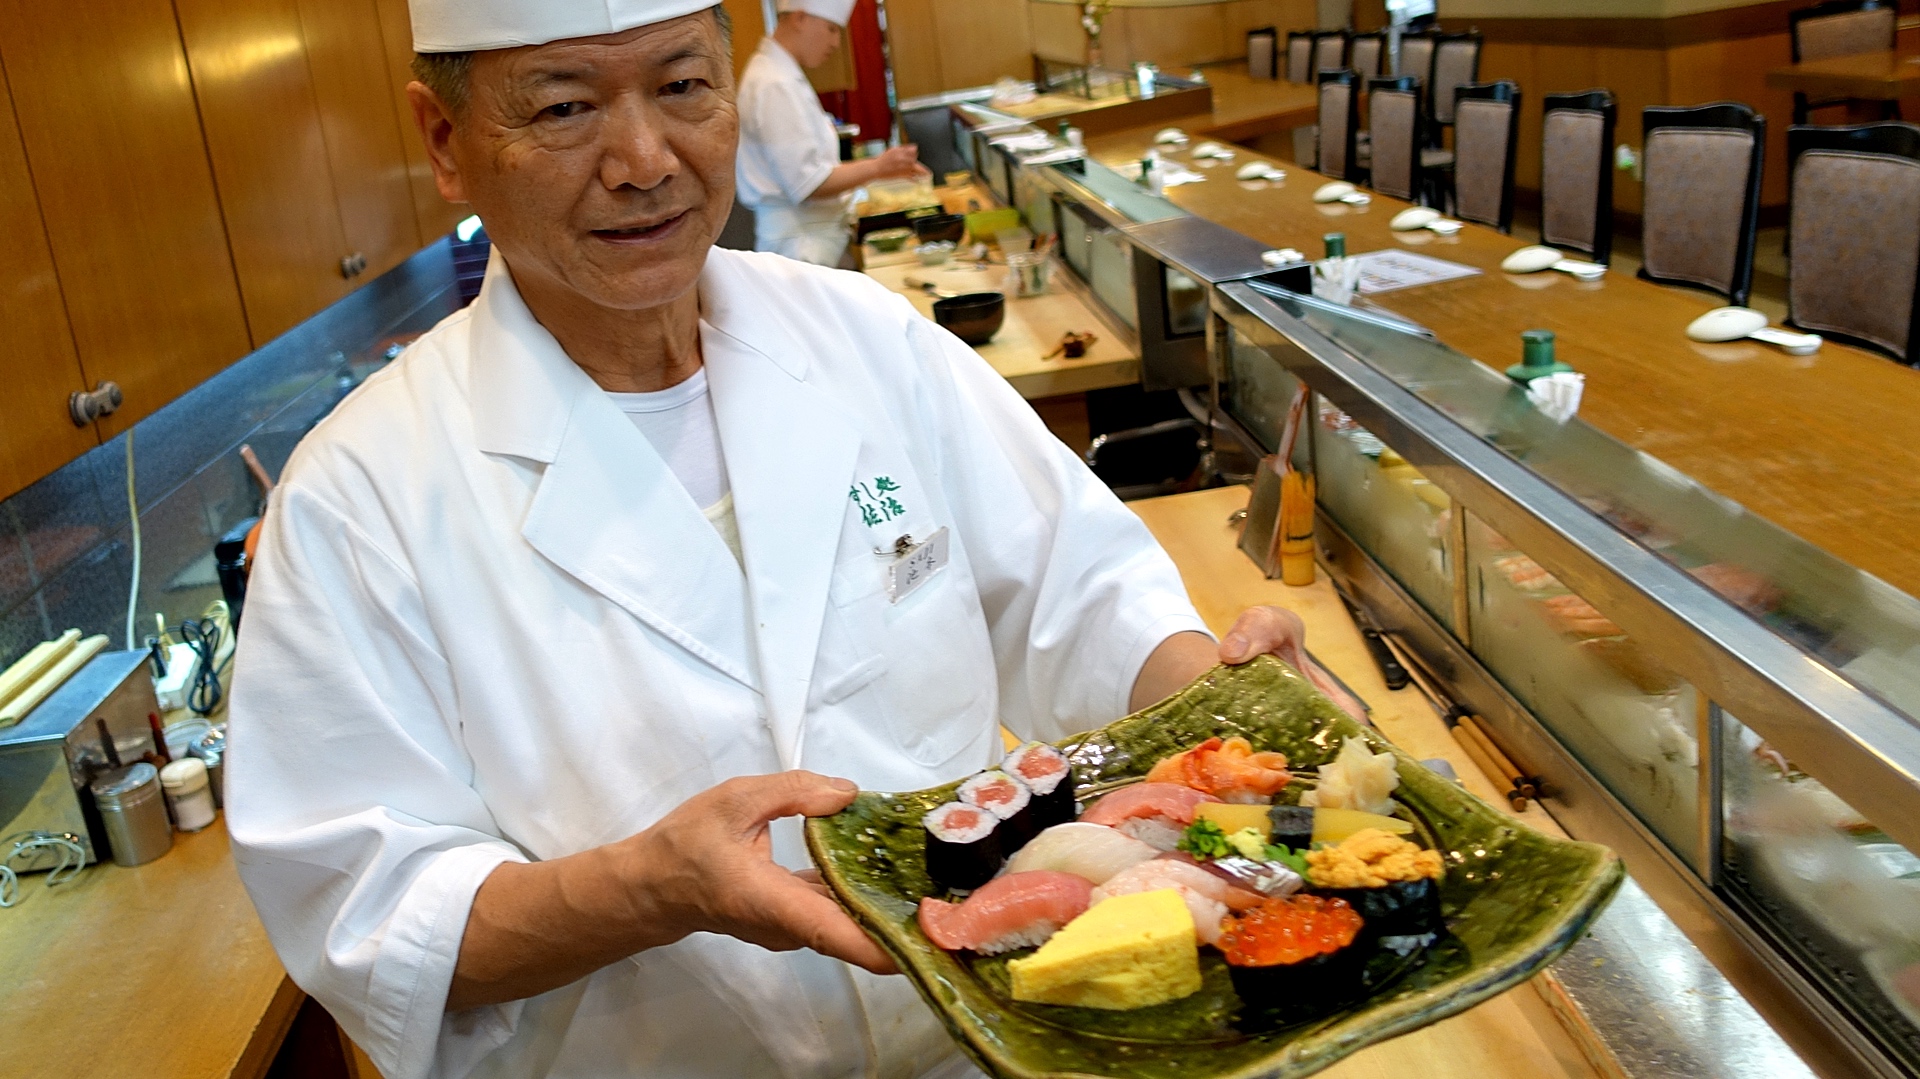 The art of Sushi making